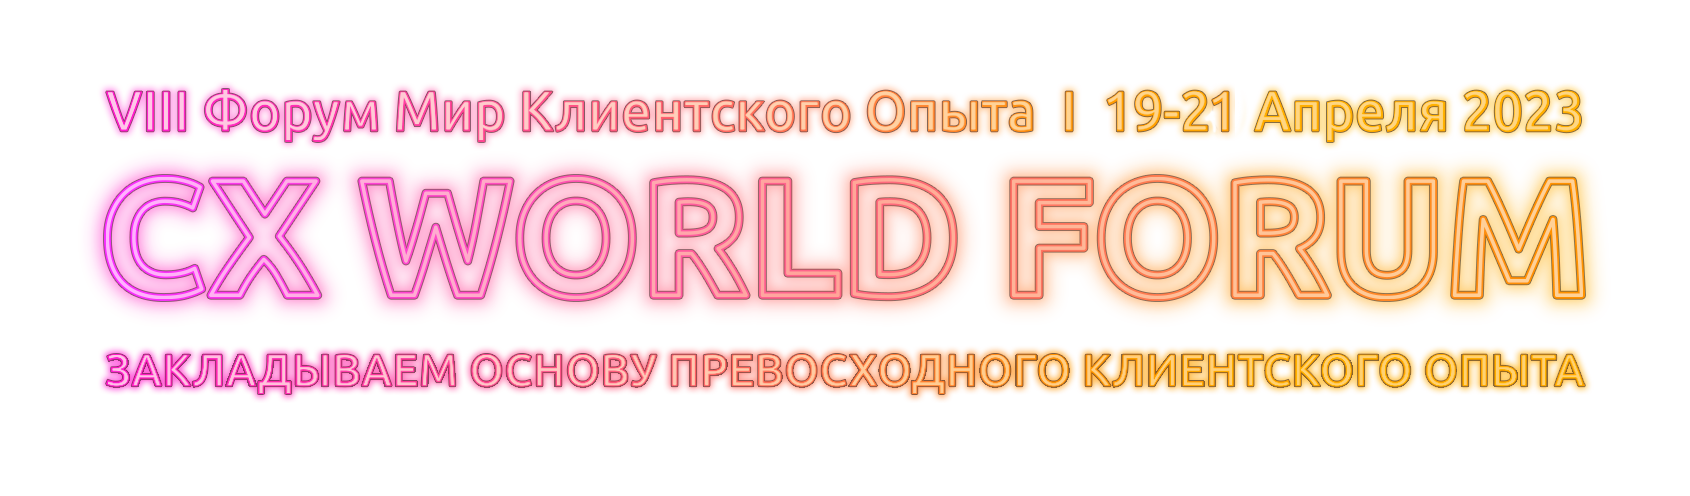 CX WORLD AWARDS VIII Форум Мир Клиентского Опыта | 19-21 Апреля 2023, Москва